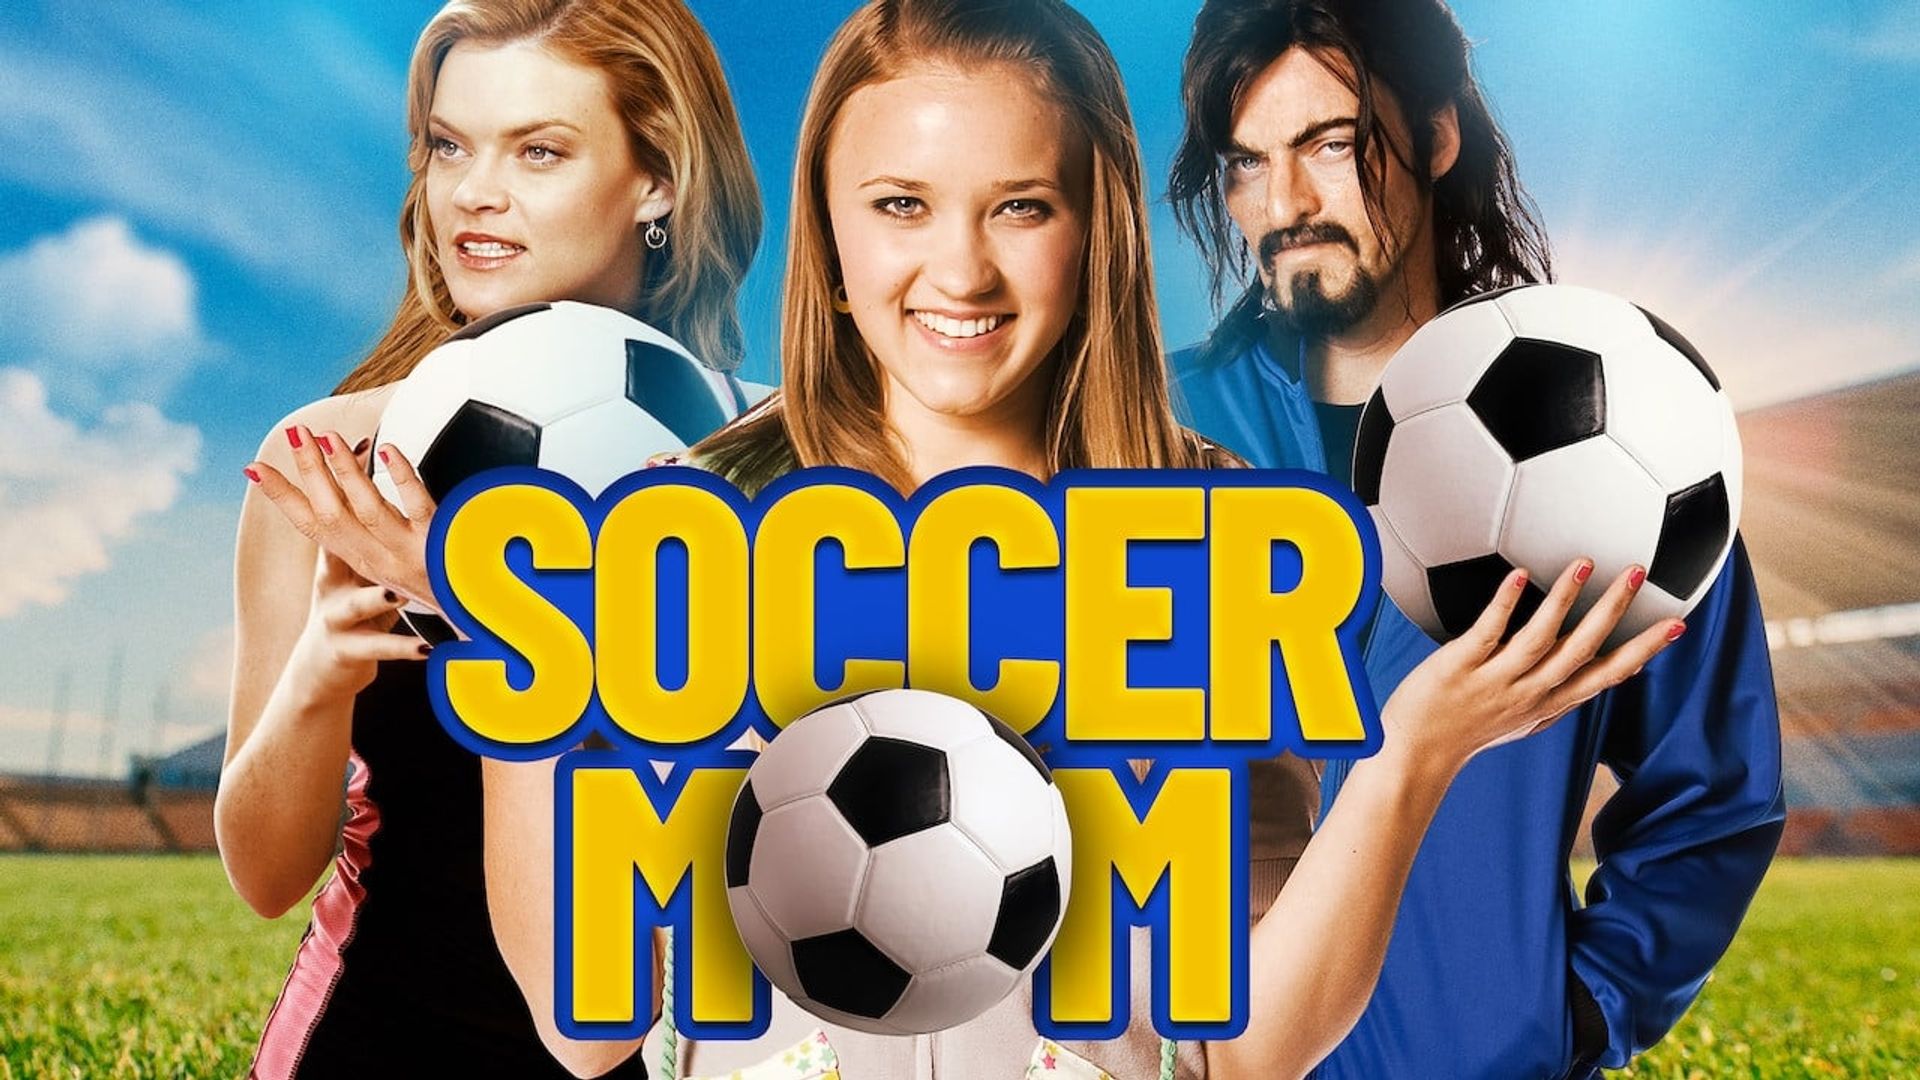 Soccer Mom background